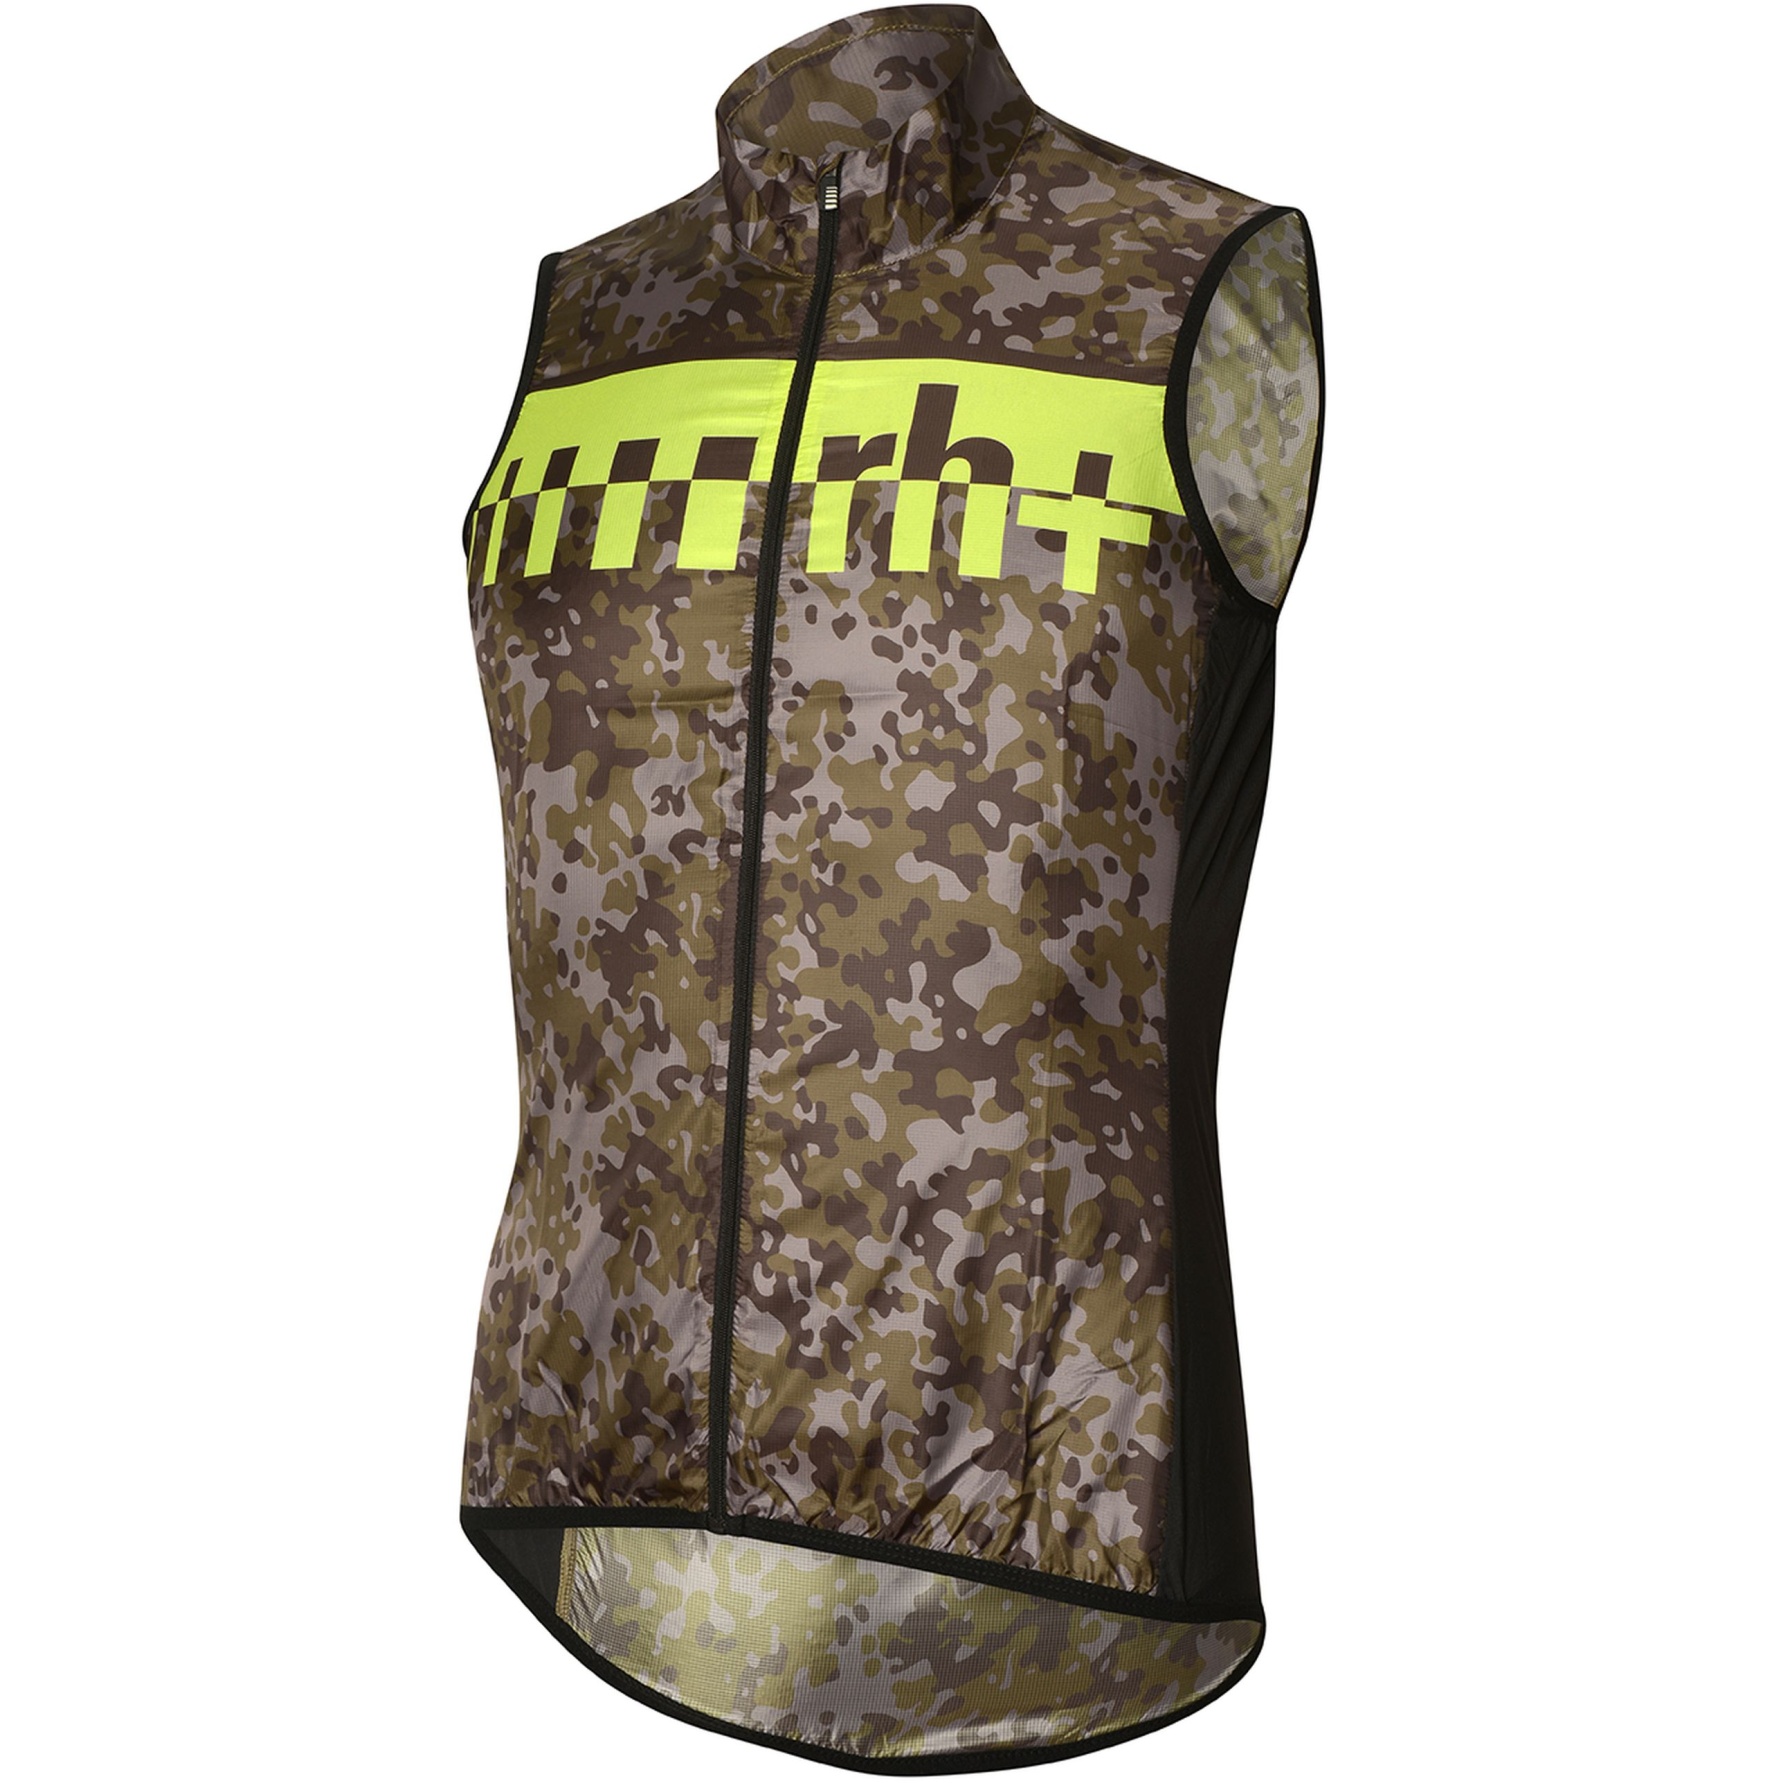 Productfoto van rh+ Emergency Pocket Vest Heren - Camouflage Kaki